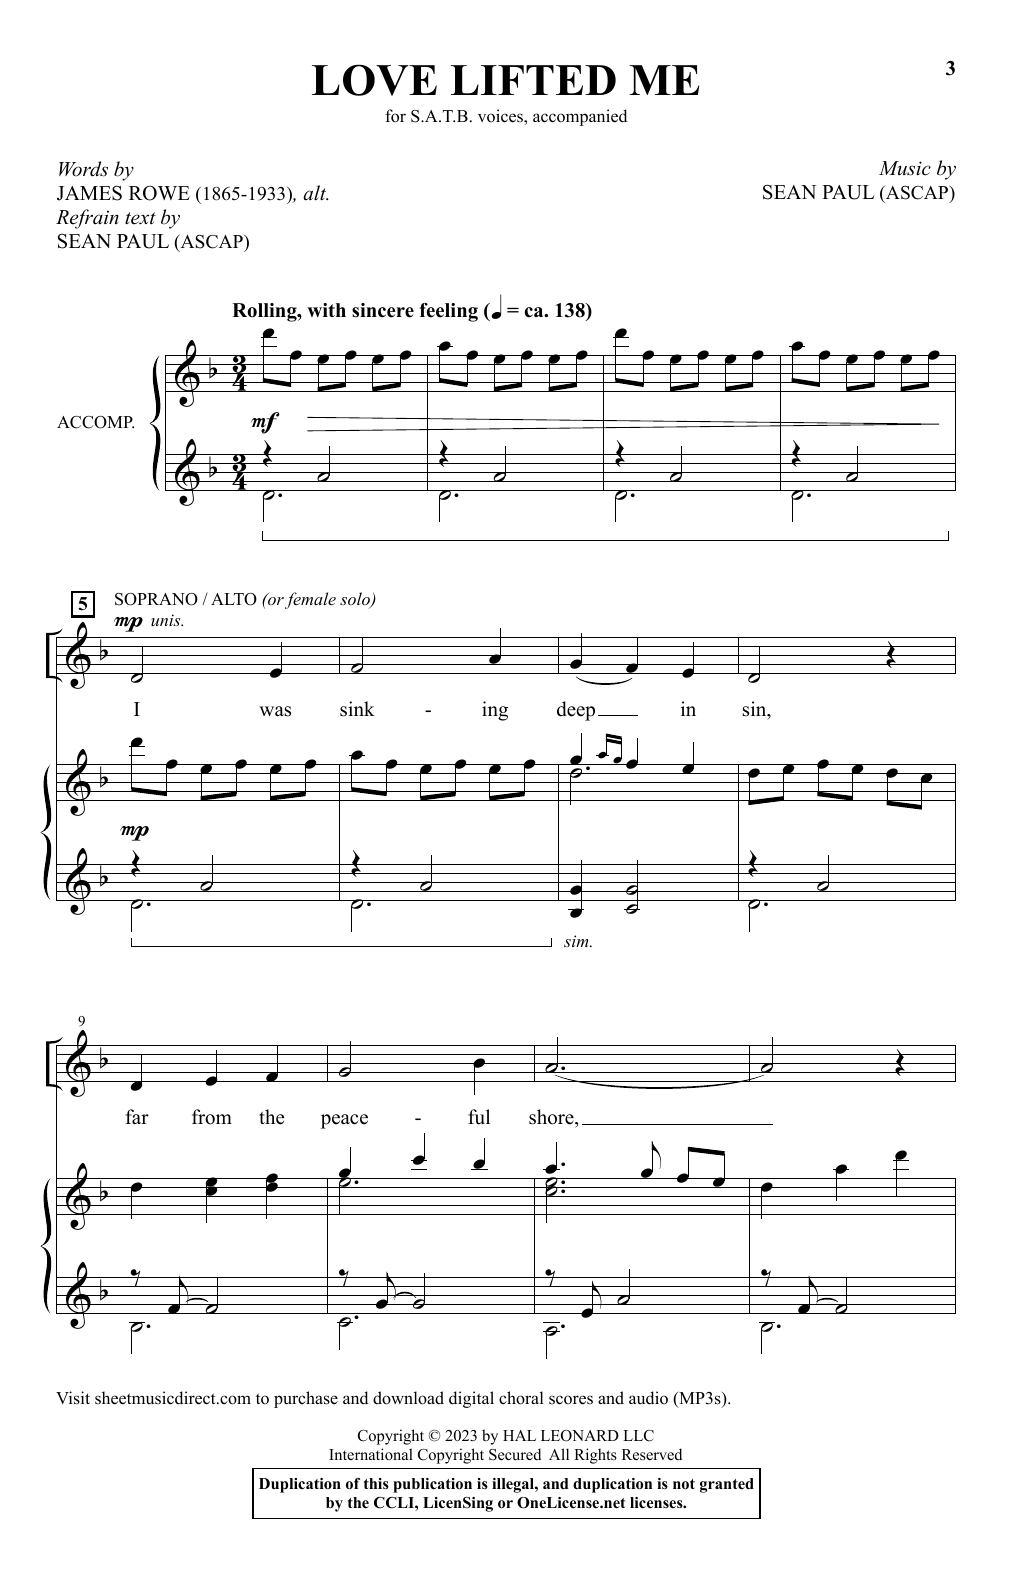 Sean Paul Love Lifted Me sheet music notes and chords arranged for SATB Choir